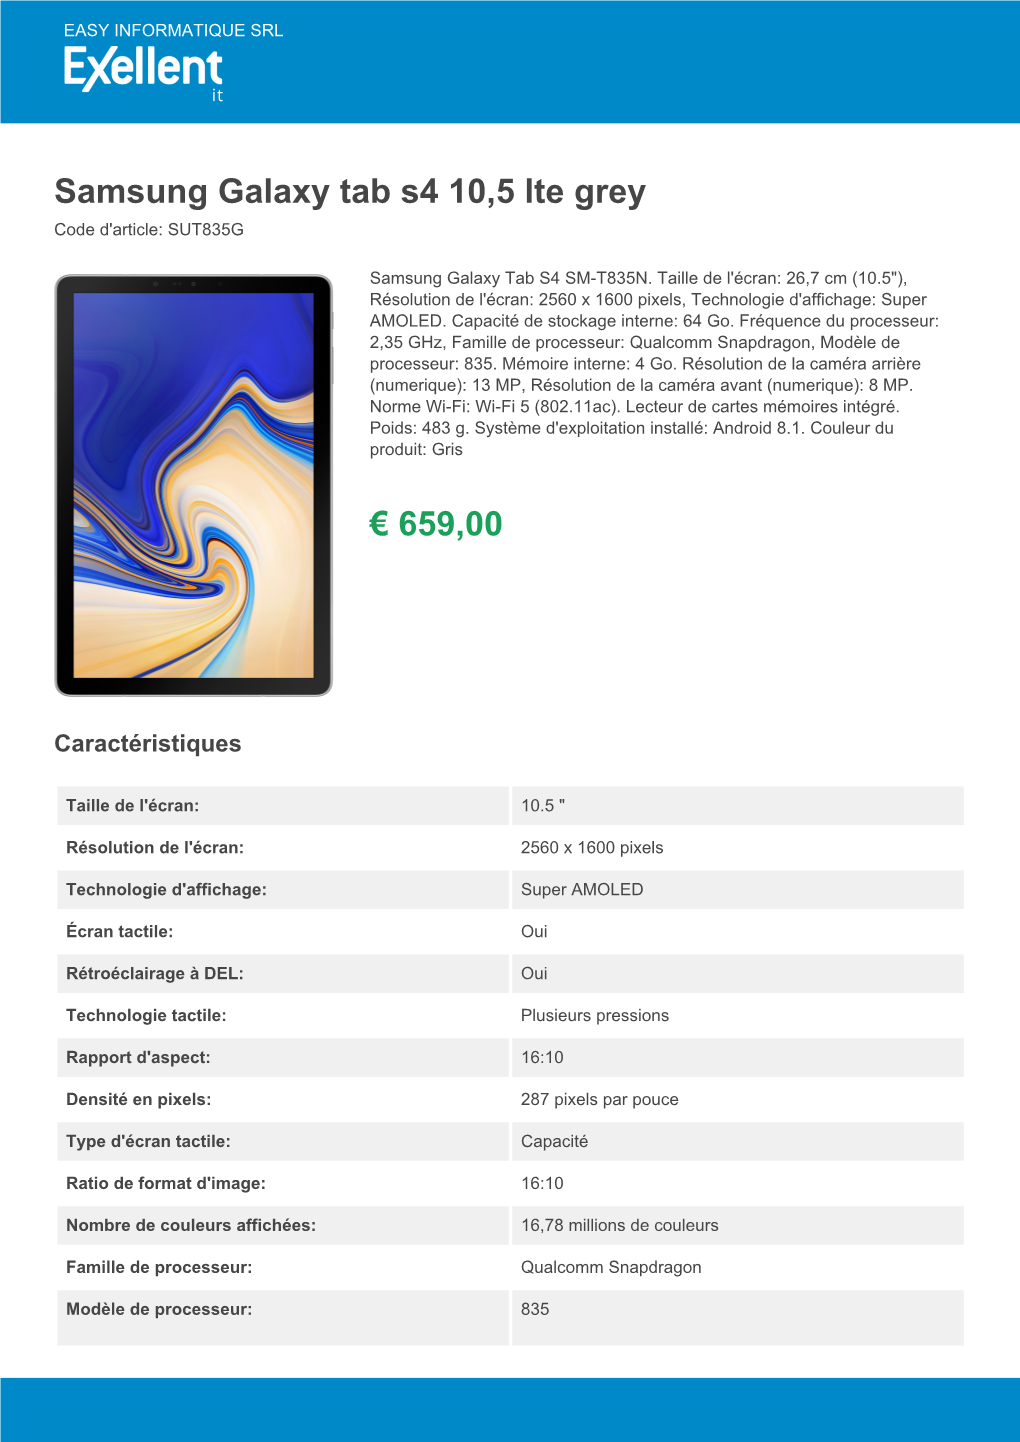 Samsung Galaxy Tab S4 10,5 Lte Grey | PDF Download